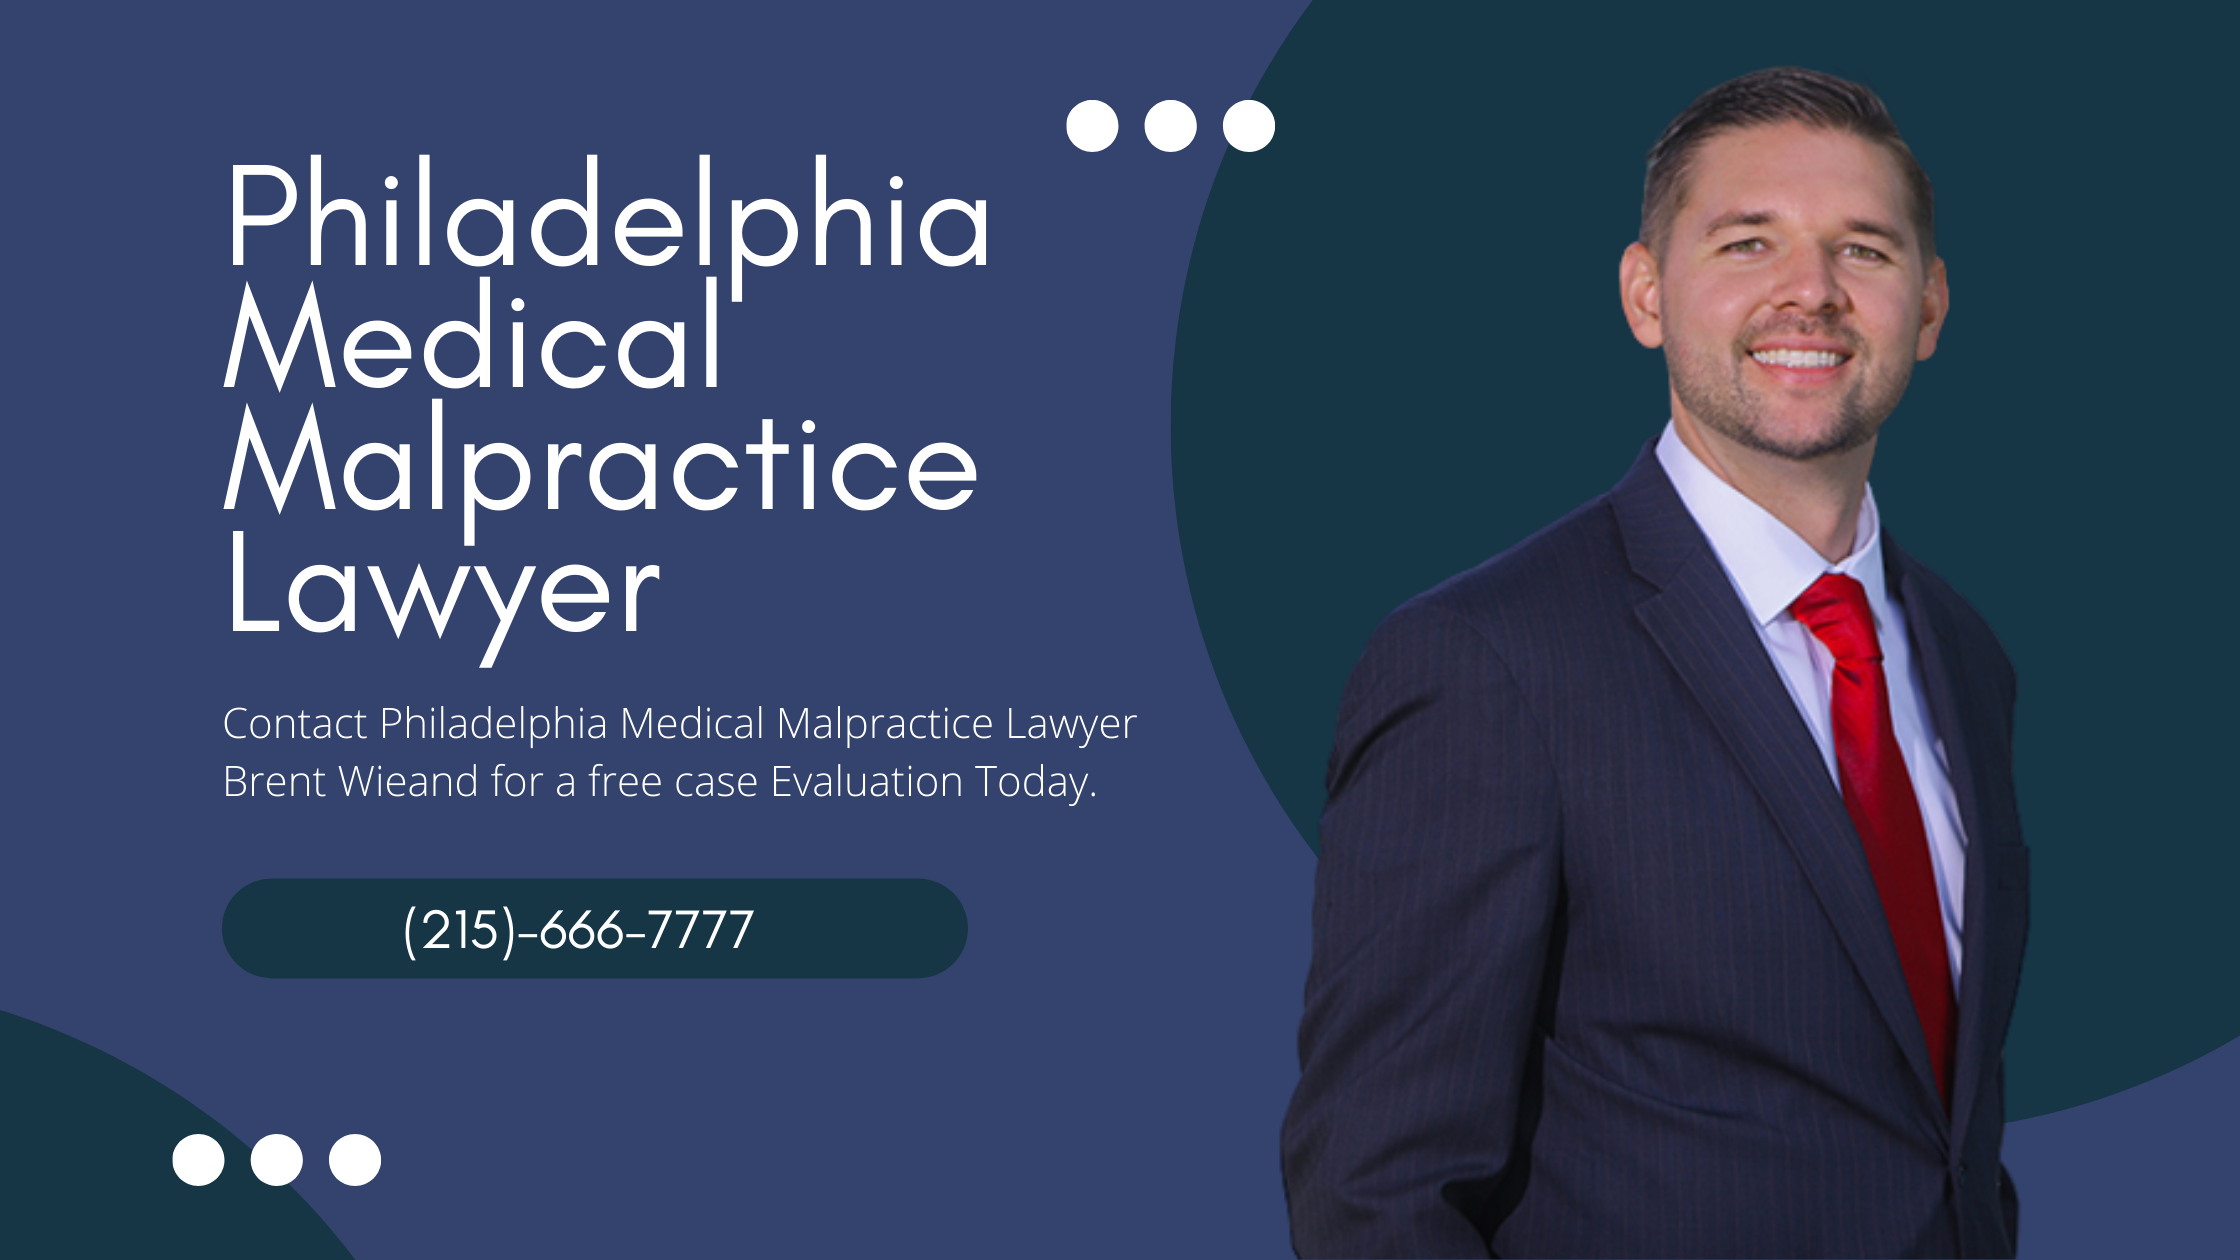 Contact Philadelphia Medical Malpractice Lawyer Brent Wieand